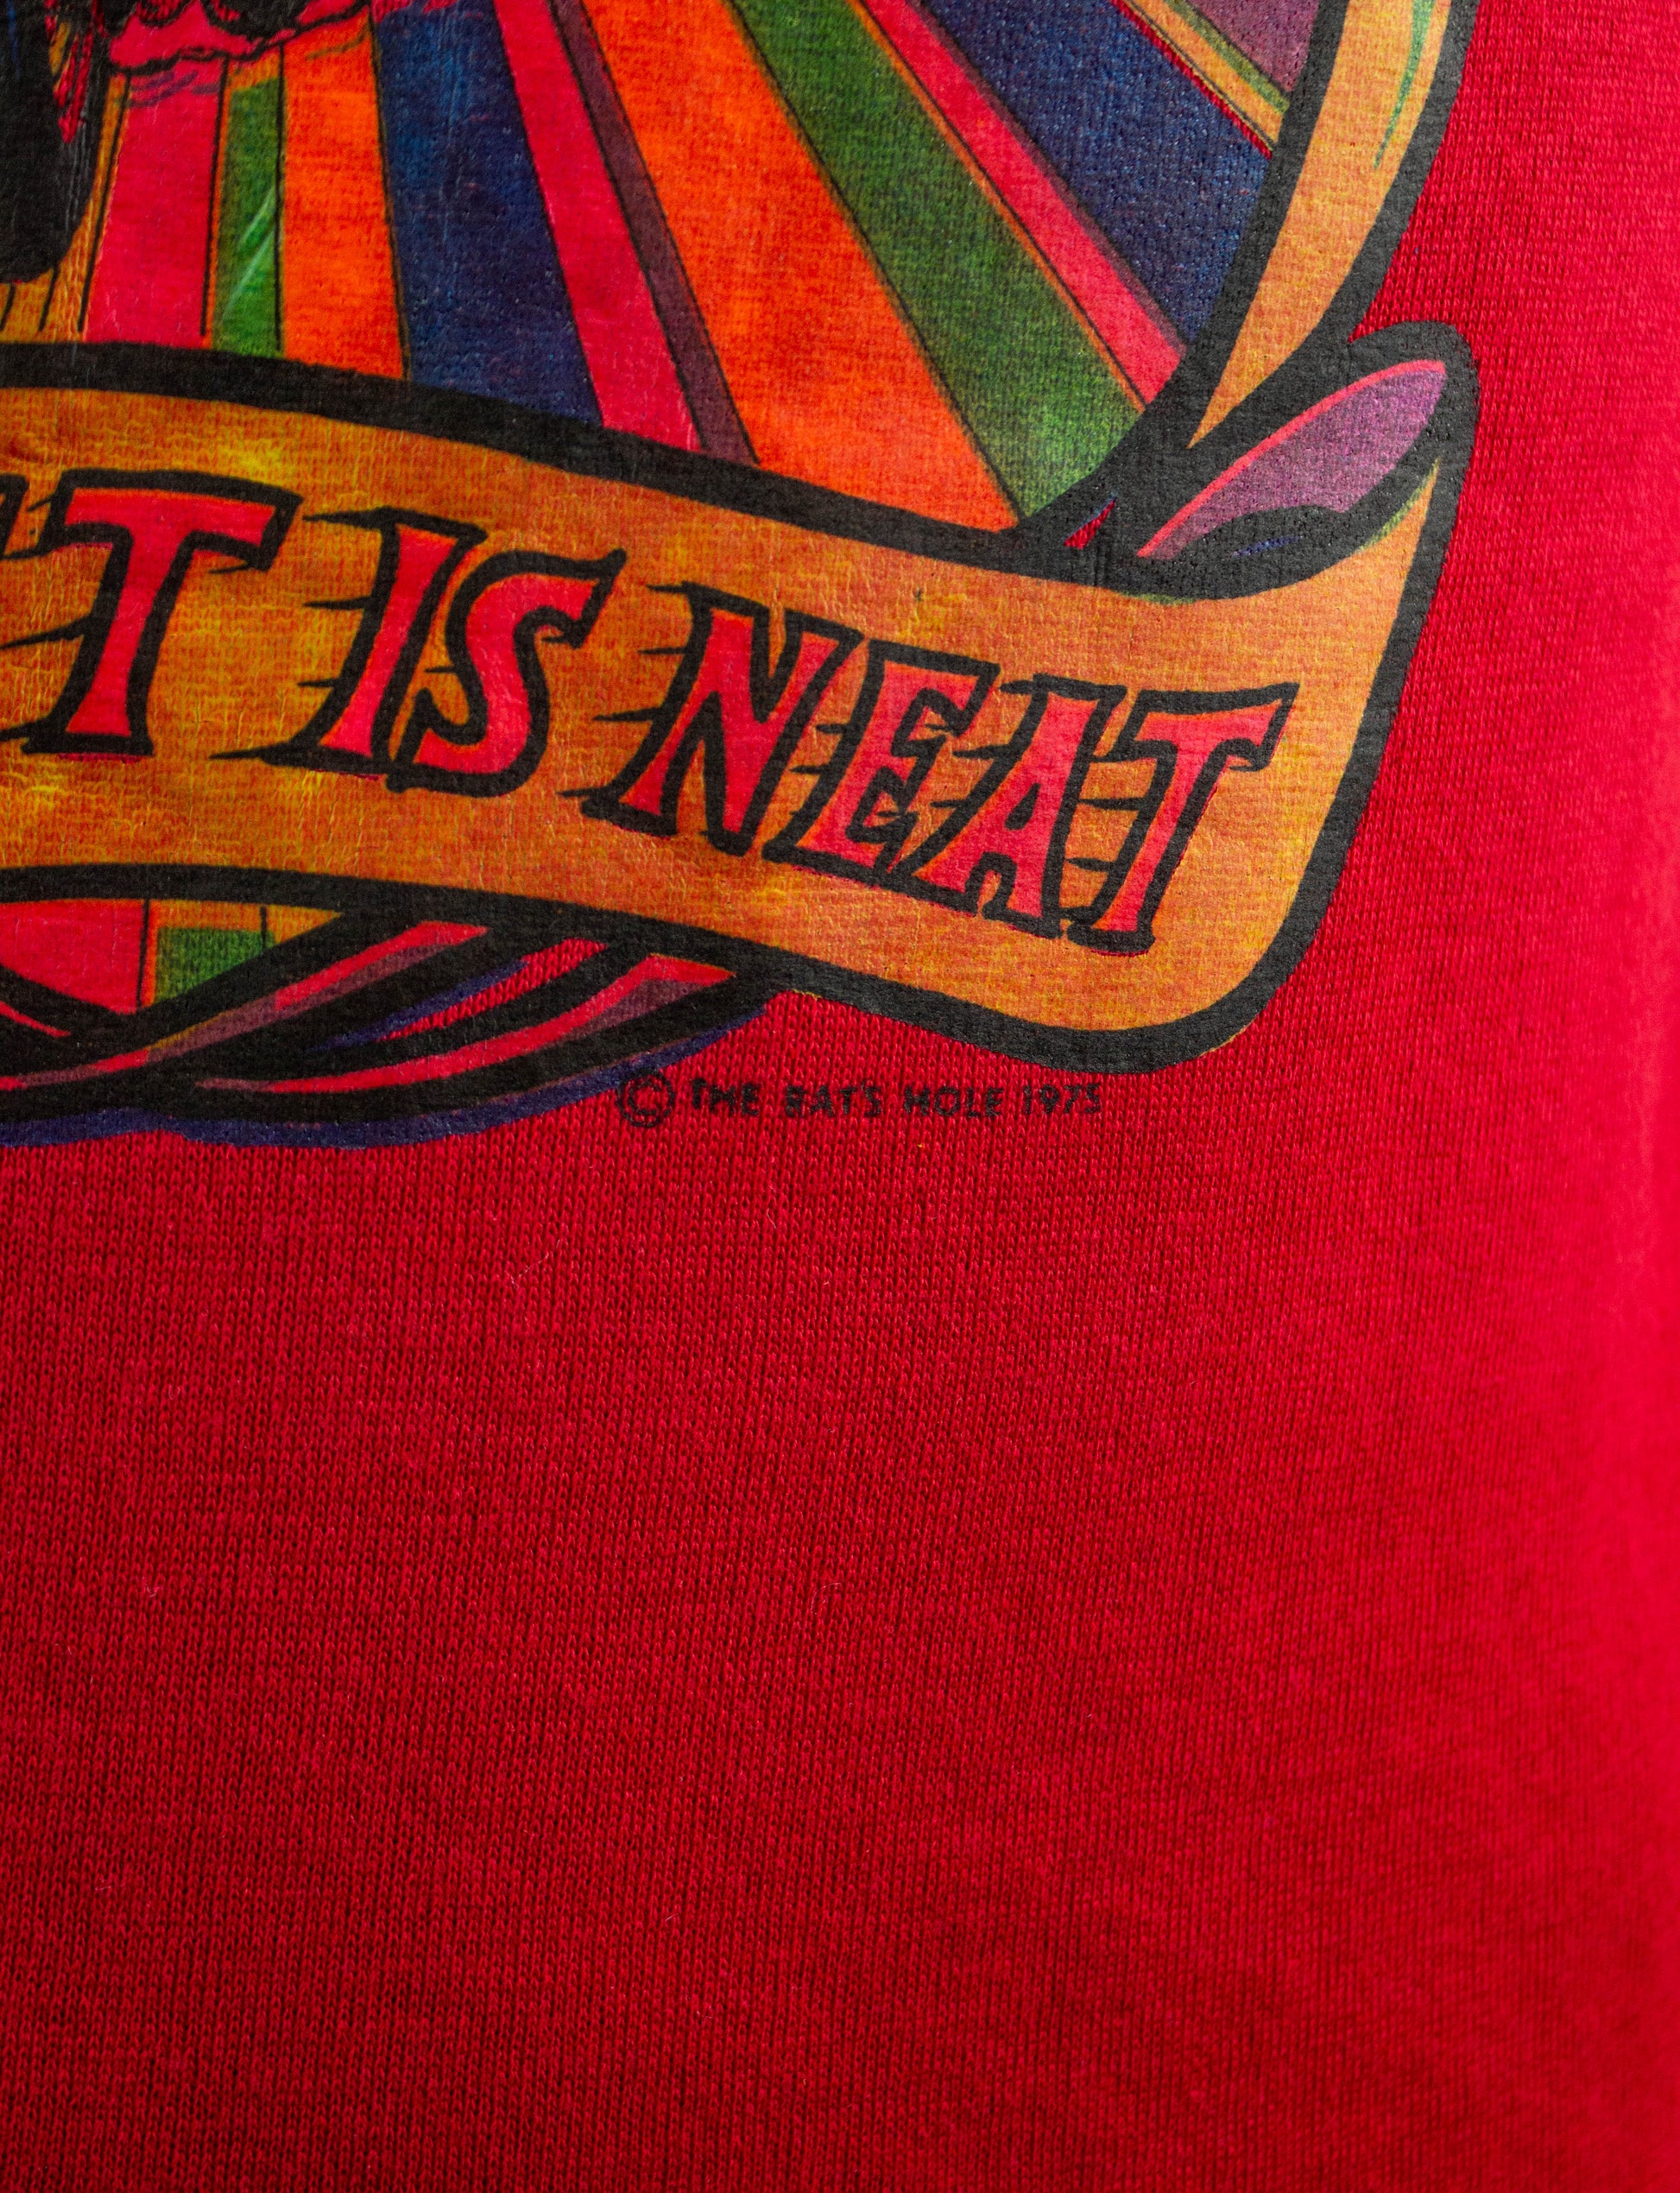 Vintage Deadstock Street Is Neat Graphic Crewneck Sweatshirt 80s Motorcycle Iron On Red Medium